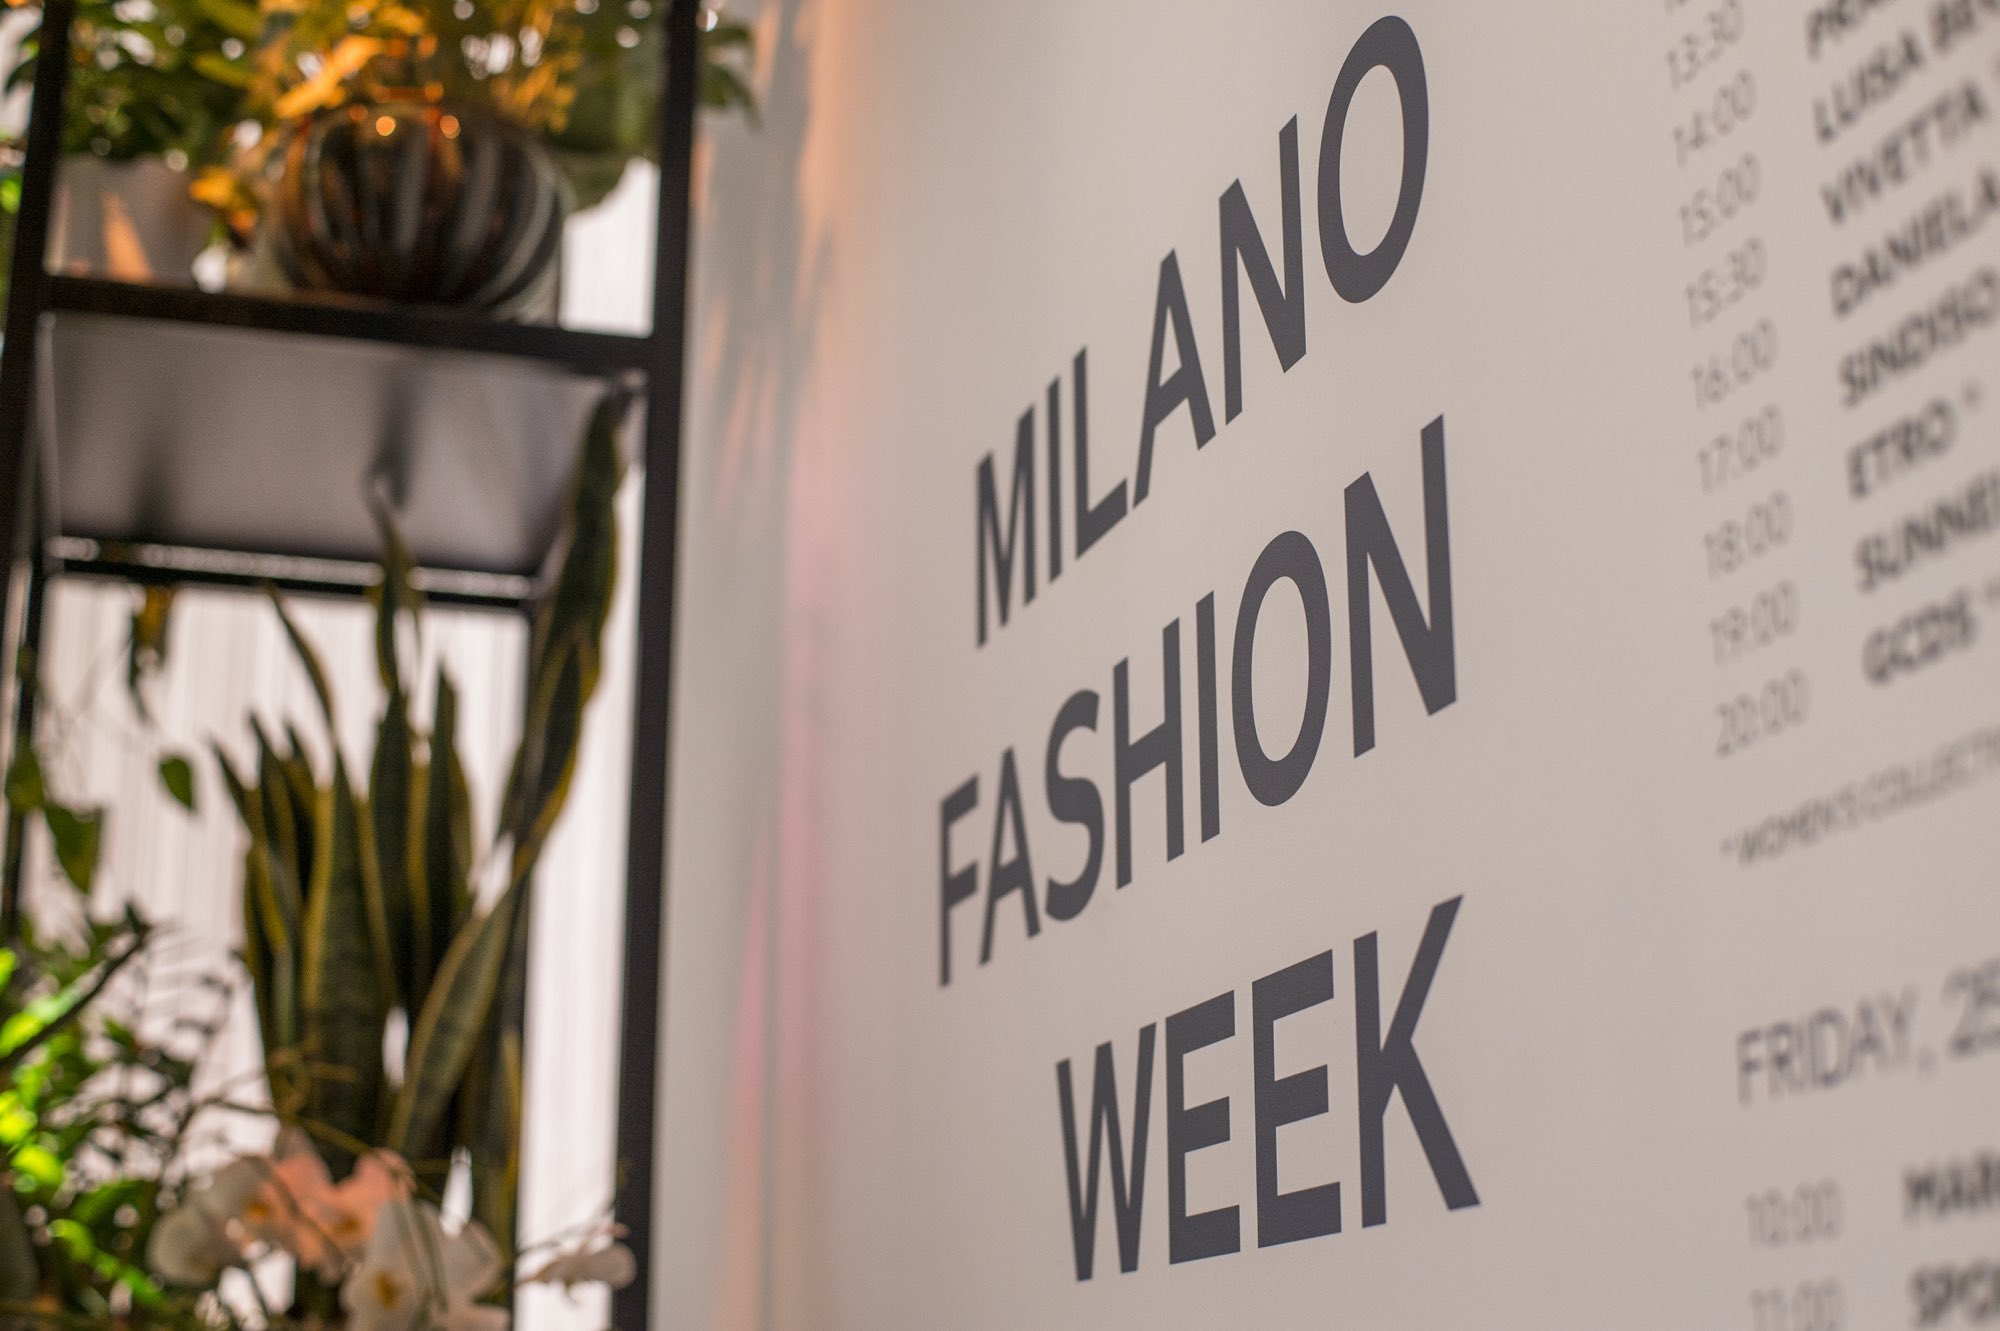  DataMagazine alla Milano Fashion Week